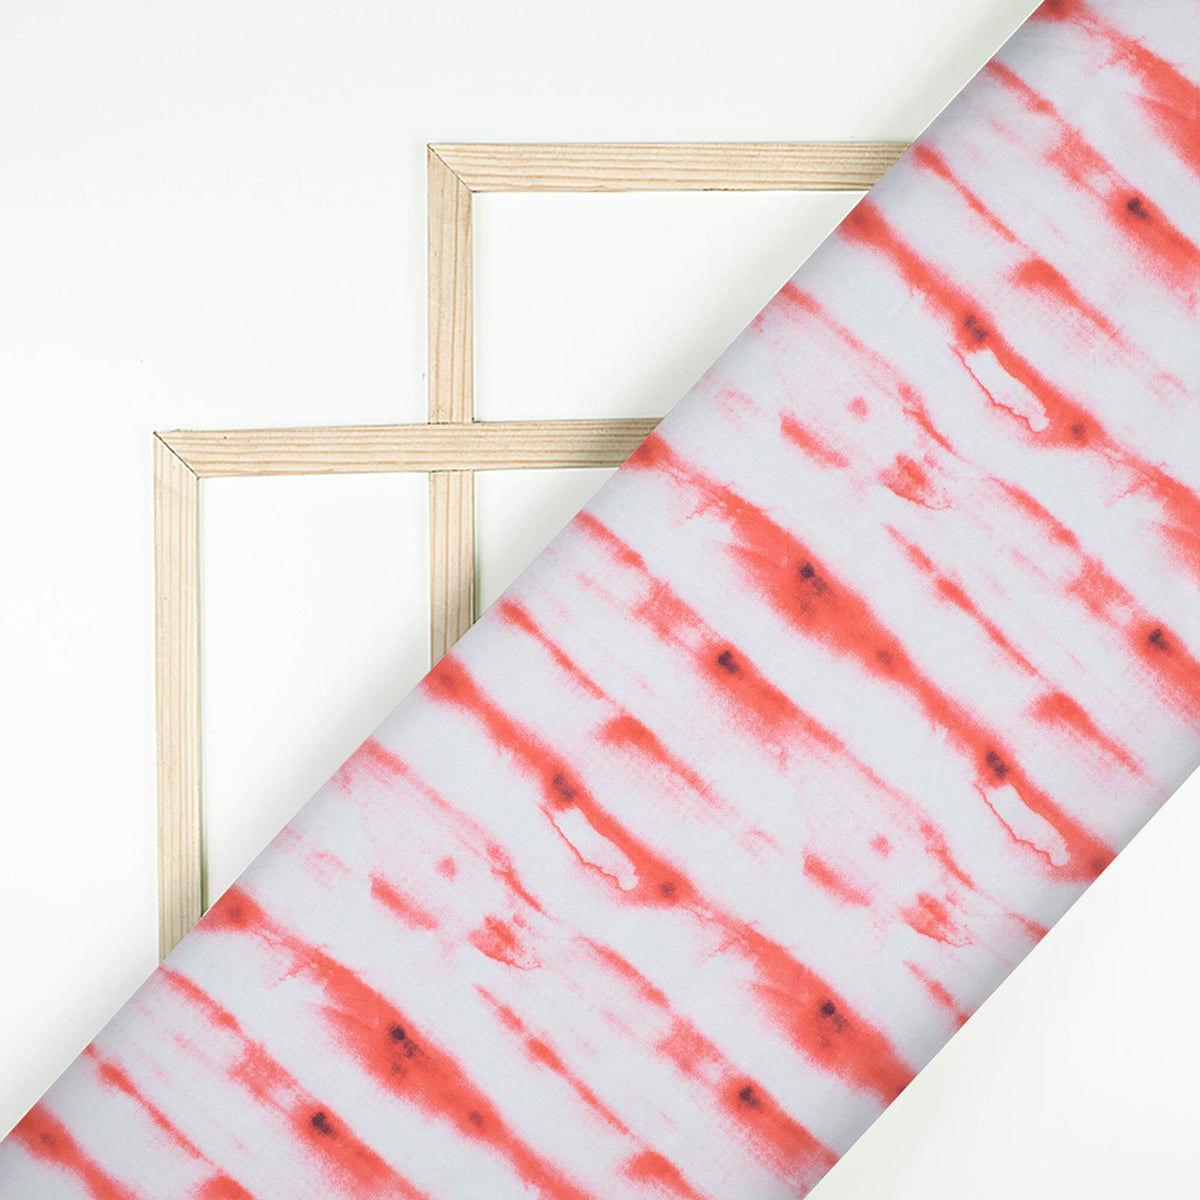 Vermilion Red And White Shibori Pattern Digital Print Crepe Silk Fabric